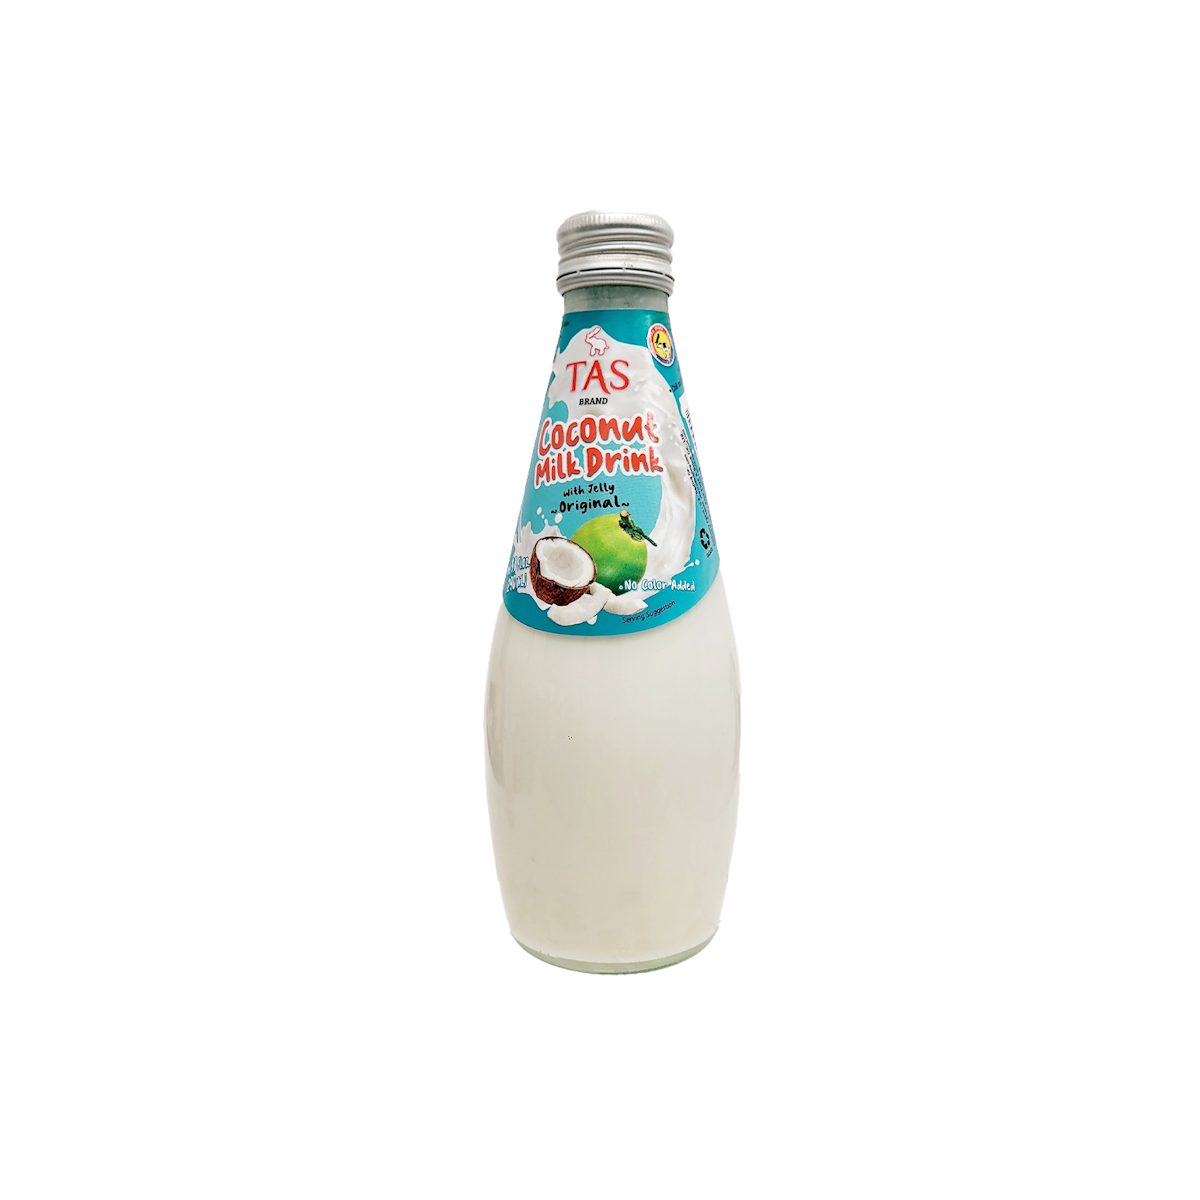 TAS Coconut Milk Drink with Jelly (Original) 9.8 oz